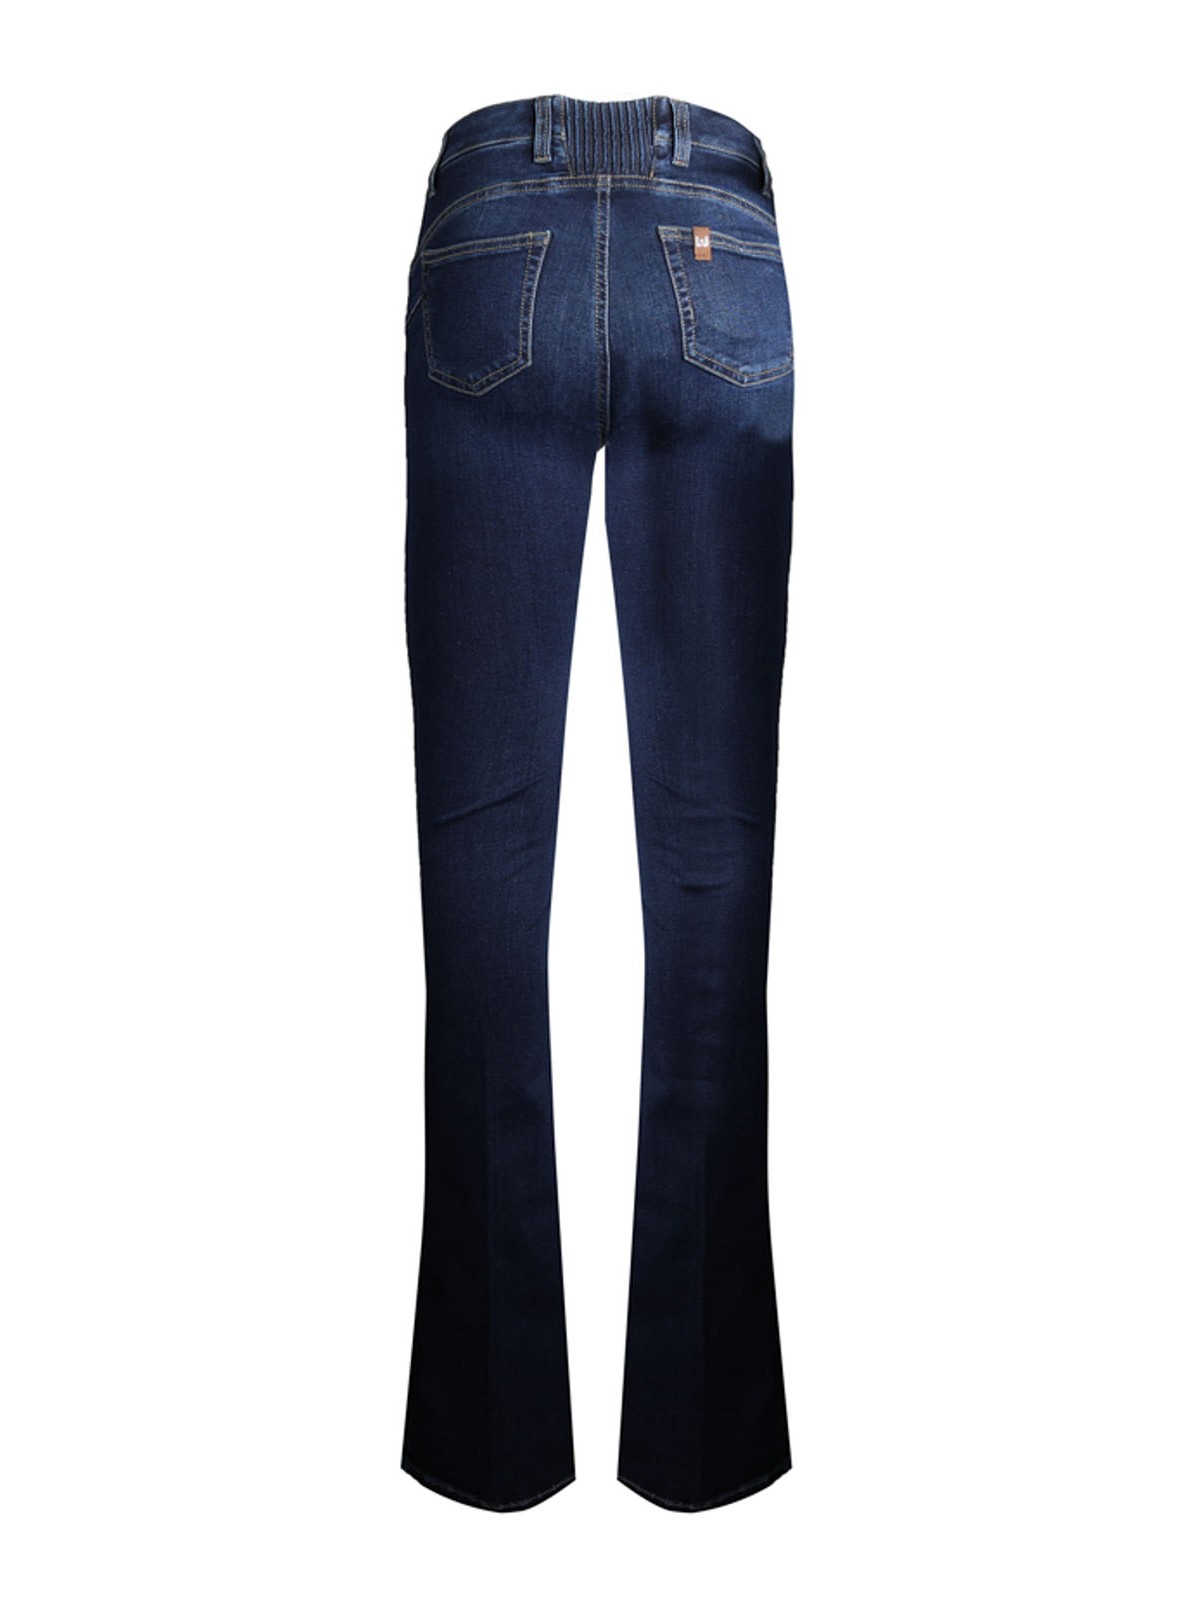 formaat gelei Flash Bootcut jeans Liu Jo - Denim jeans - UF2061DS01578349 | iKRIX.com